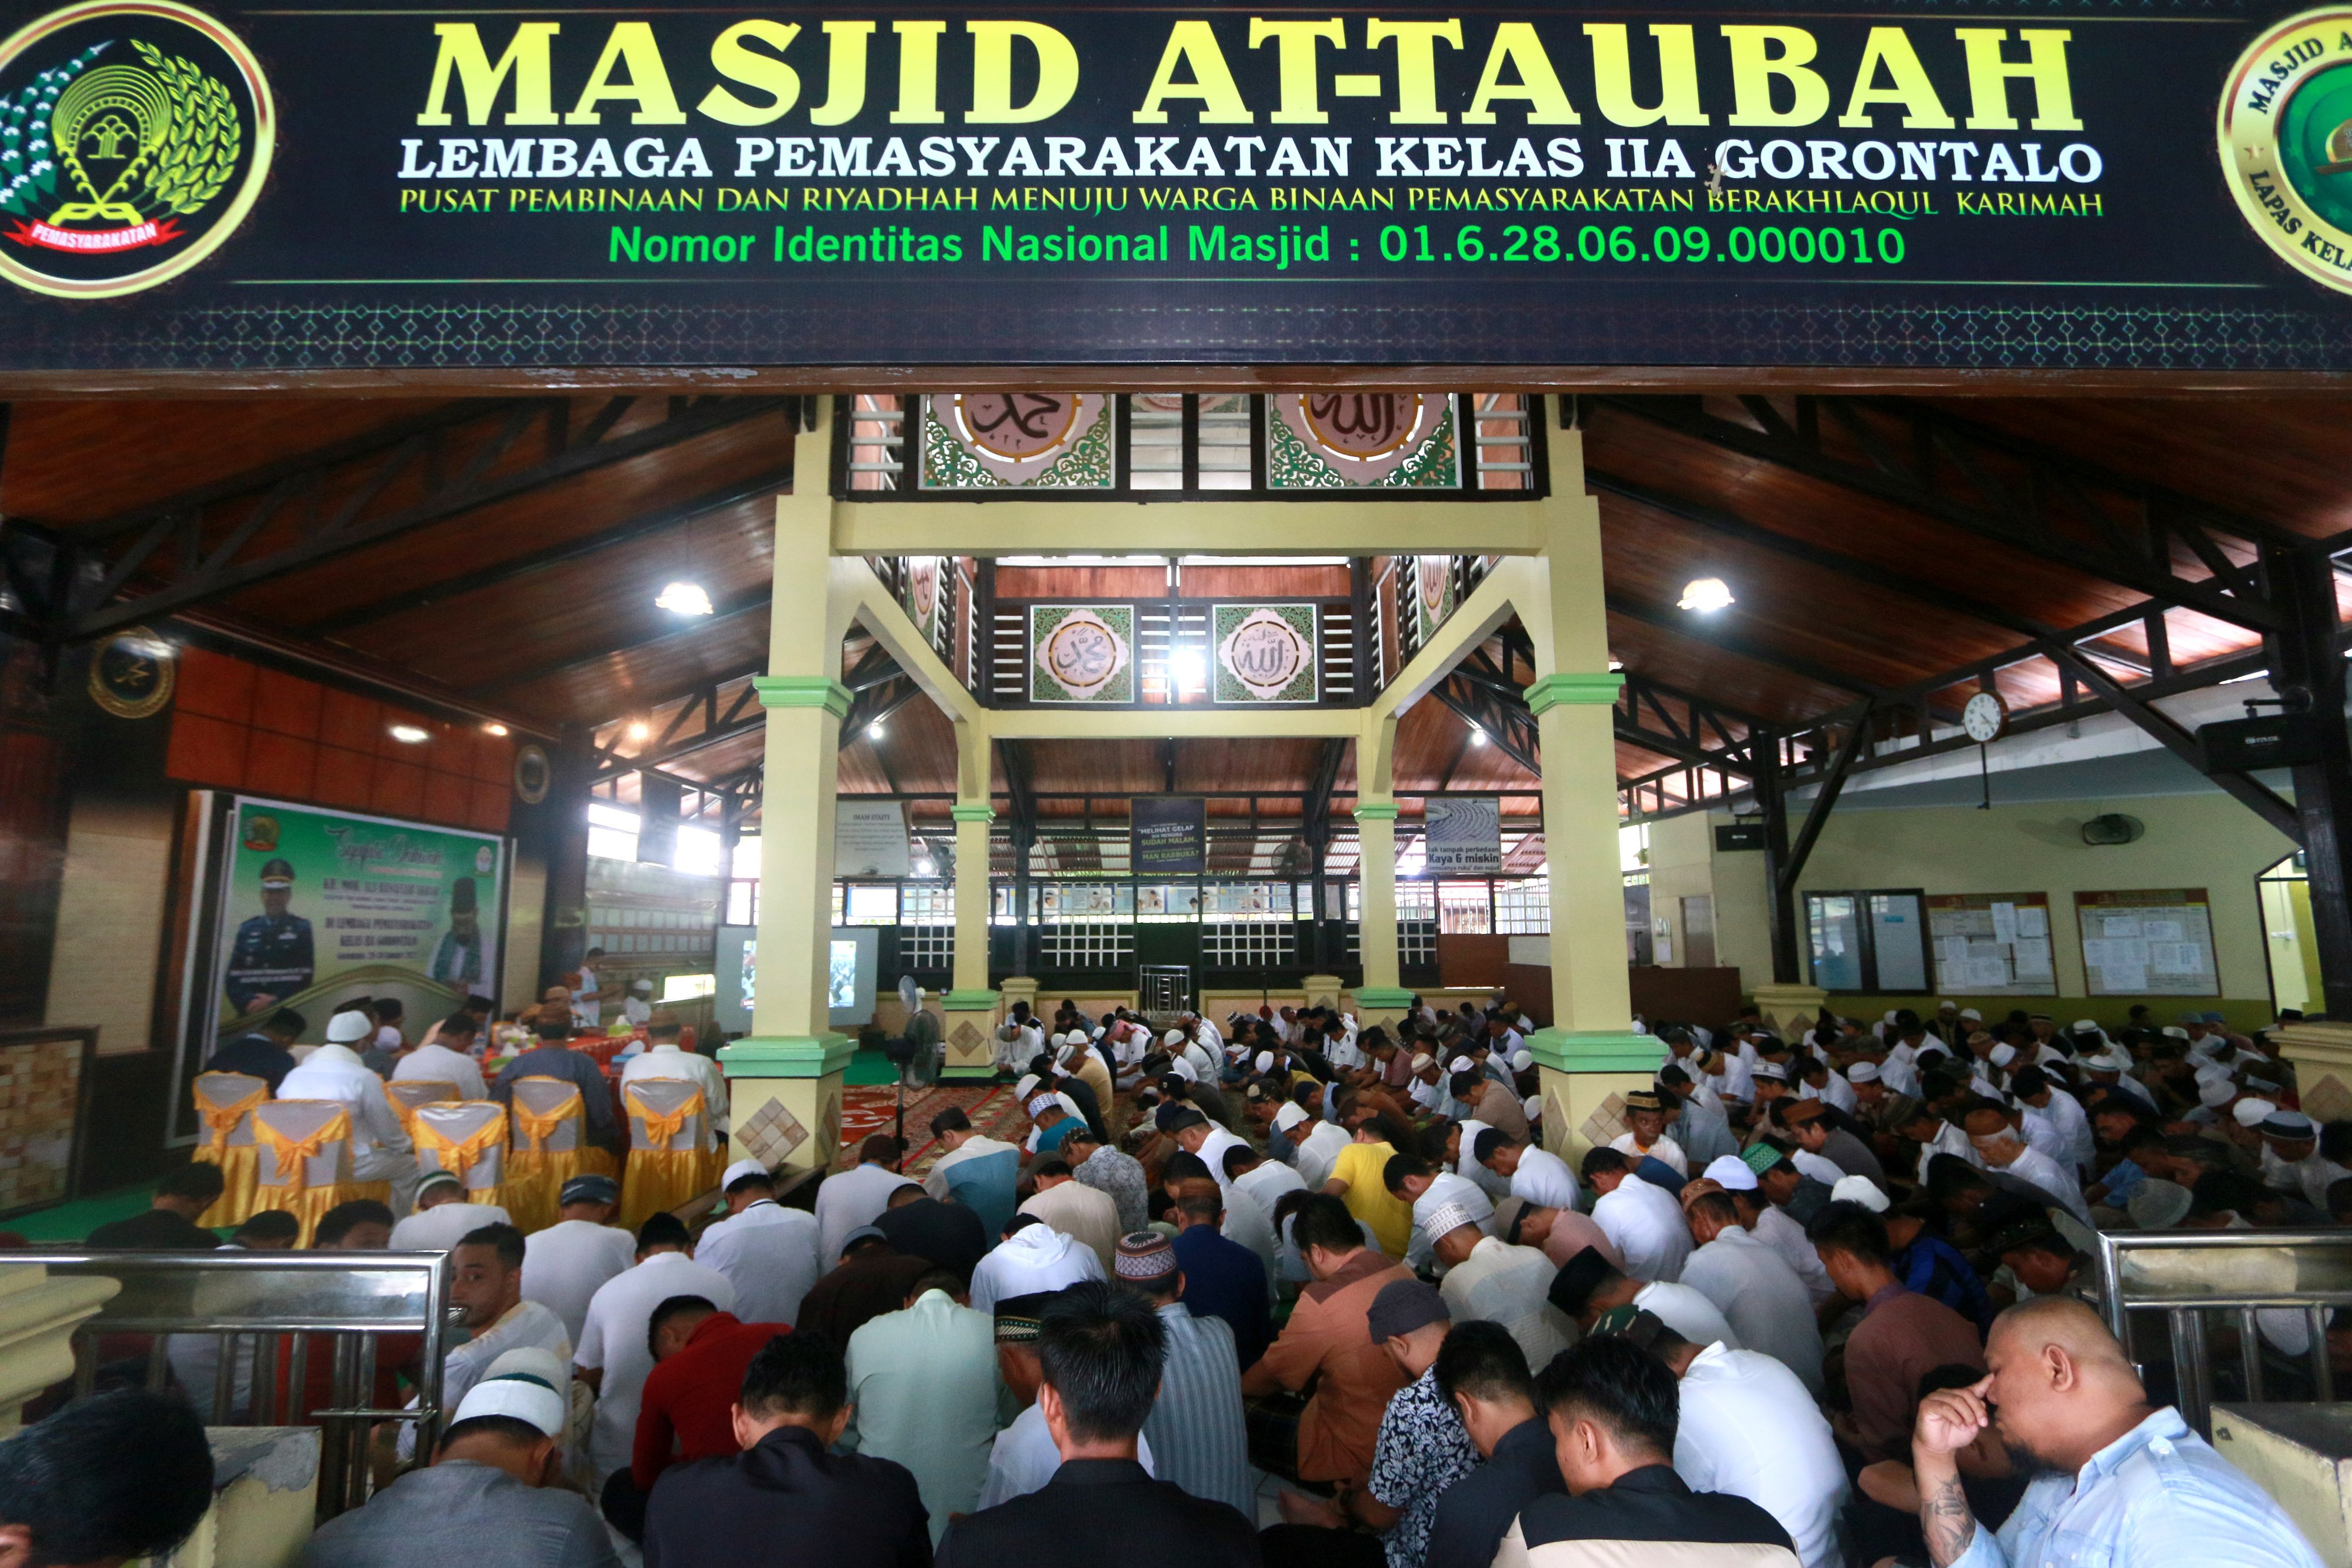 Sejumlah warga Binaan Pemasyarakat (WBP) yang terdiri dari narapidana dan tahanan belajar mengikuti legiatan ceramah agama di Masjid At-Taubah di dalam Lembaga Pemasyarakatan (Lapas) Kelas IIA, di Kota Gorontalo, Gorontalo.